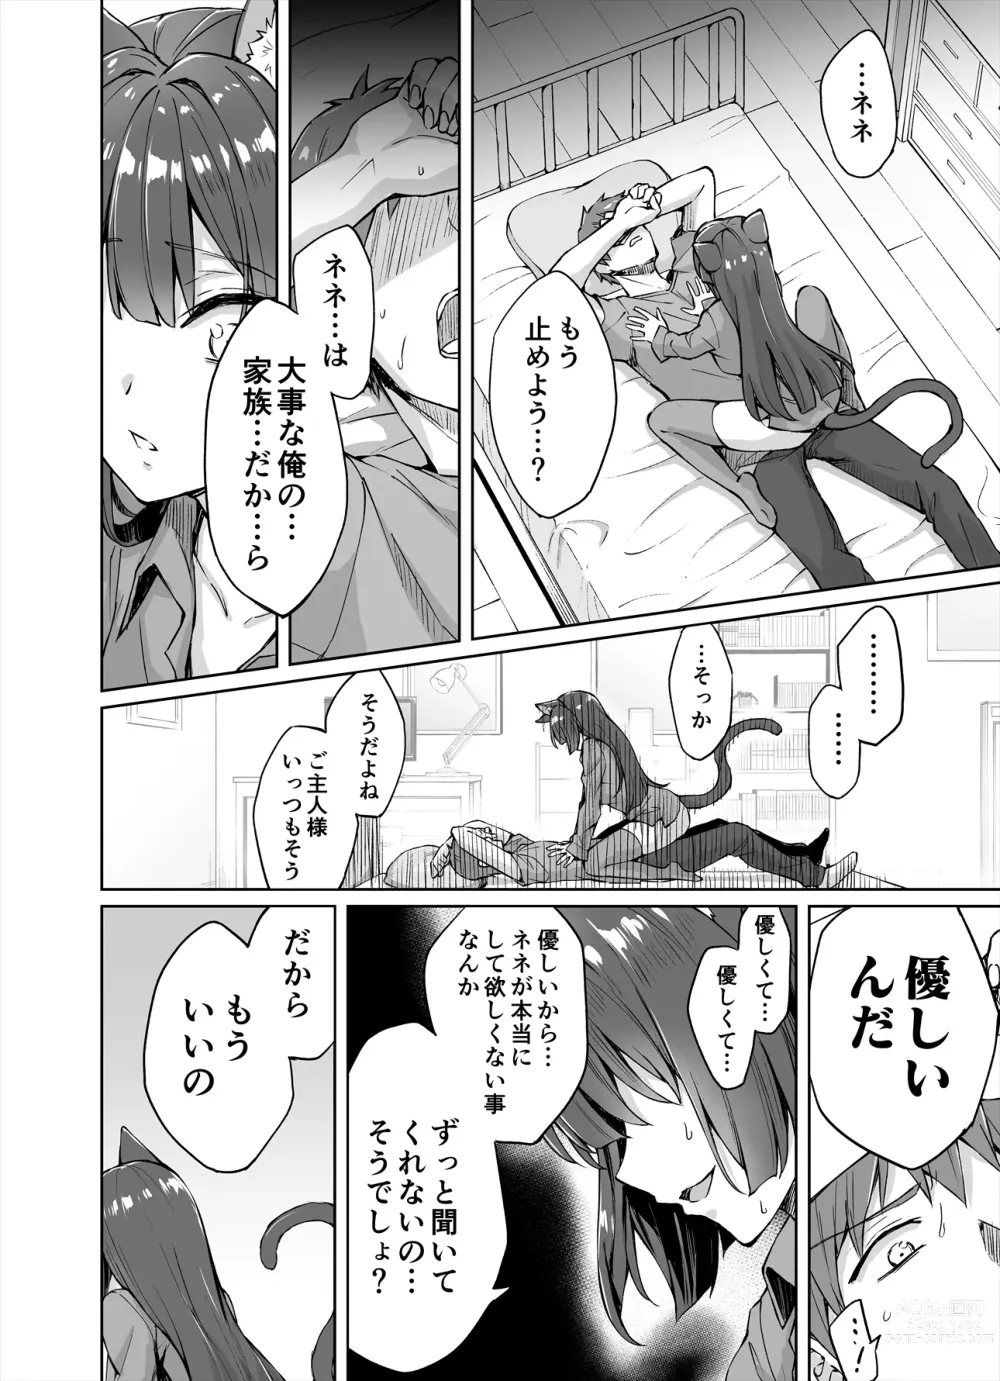 Page 5 of doujinshi Yandere-kai Neko-chan Seijin Manga #01